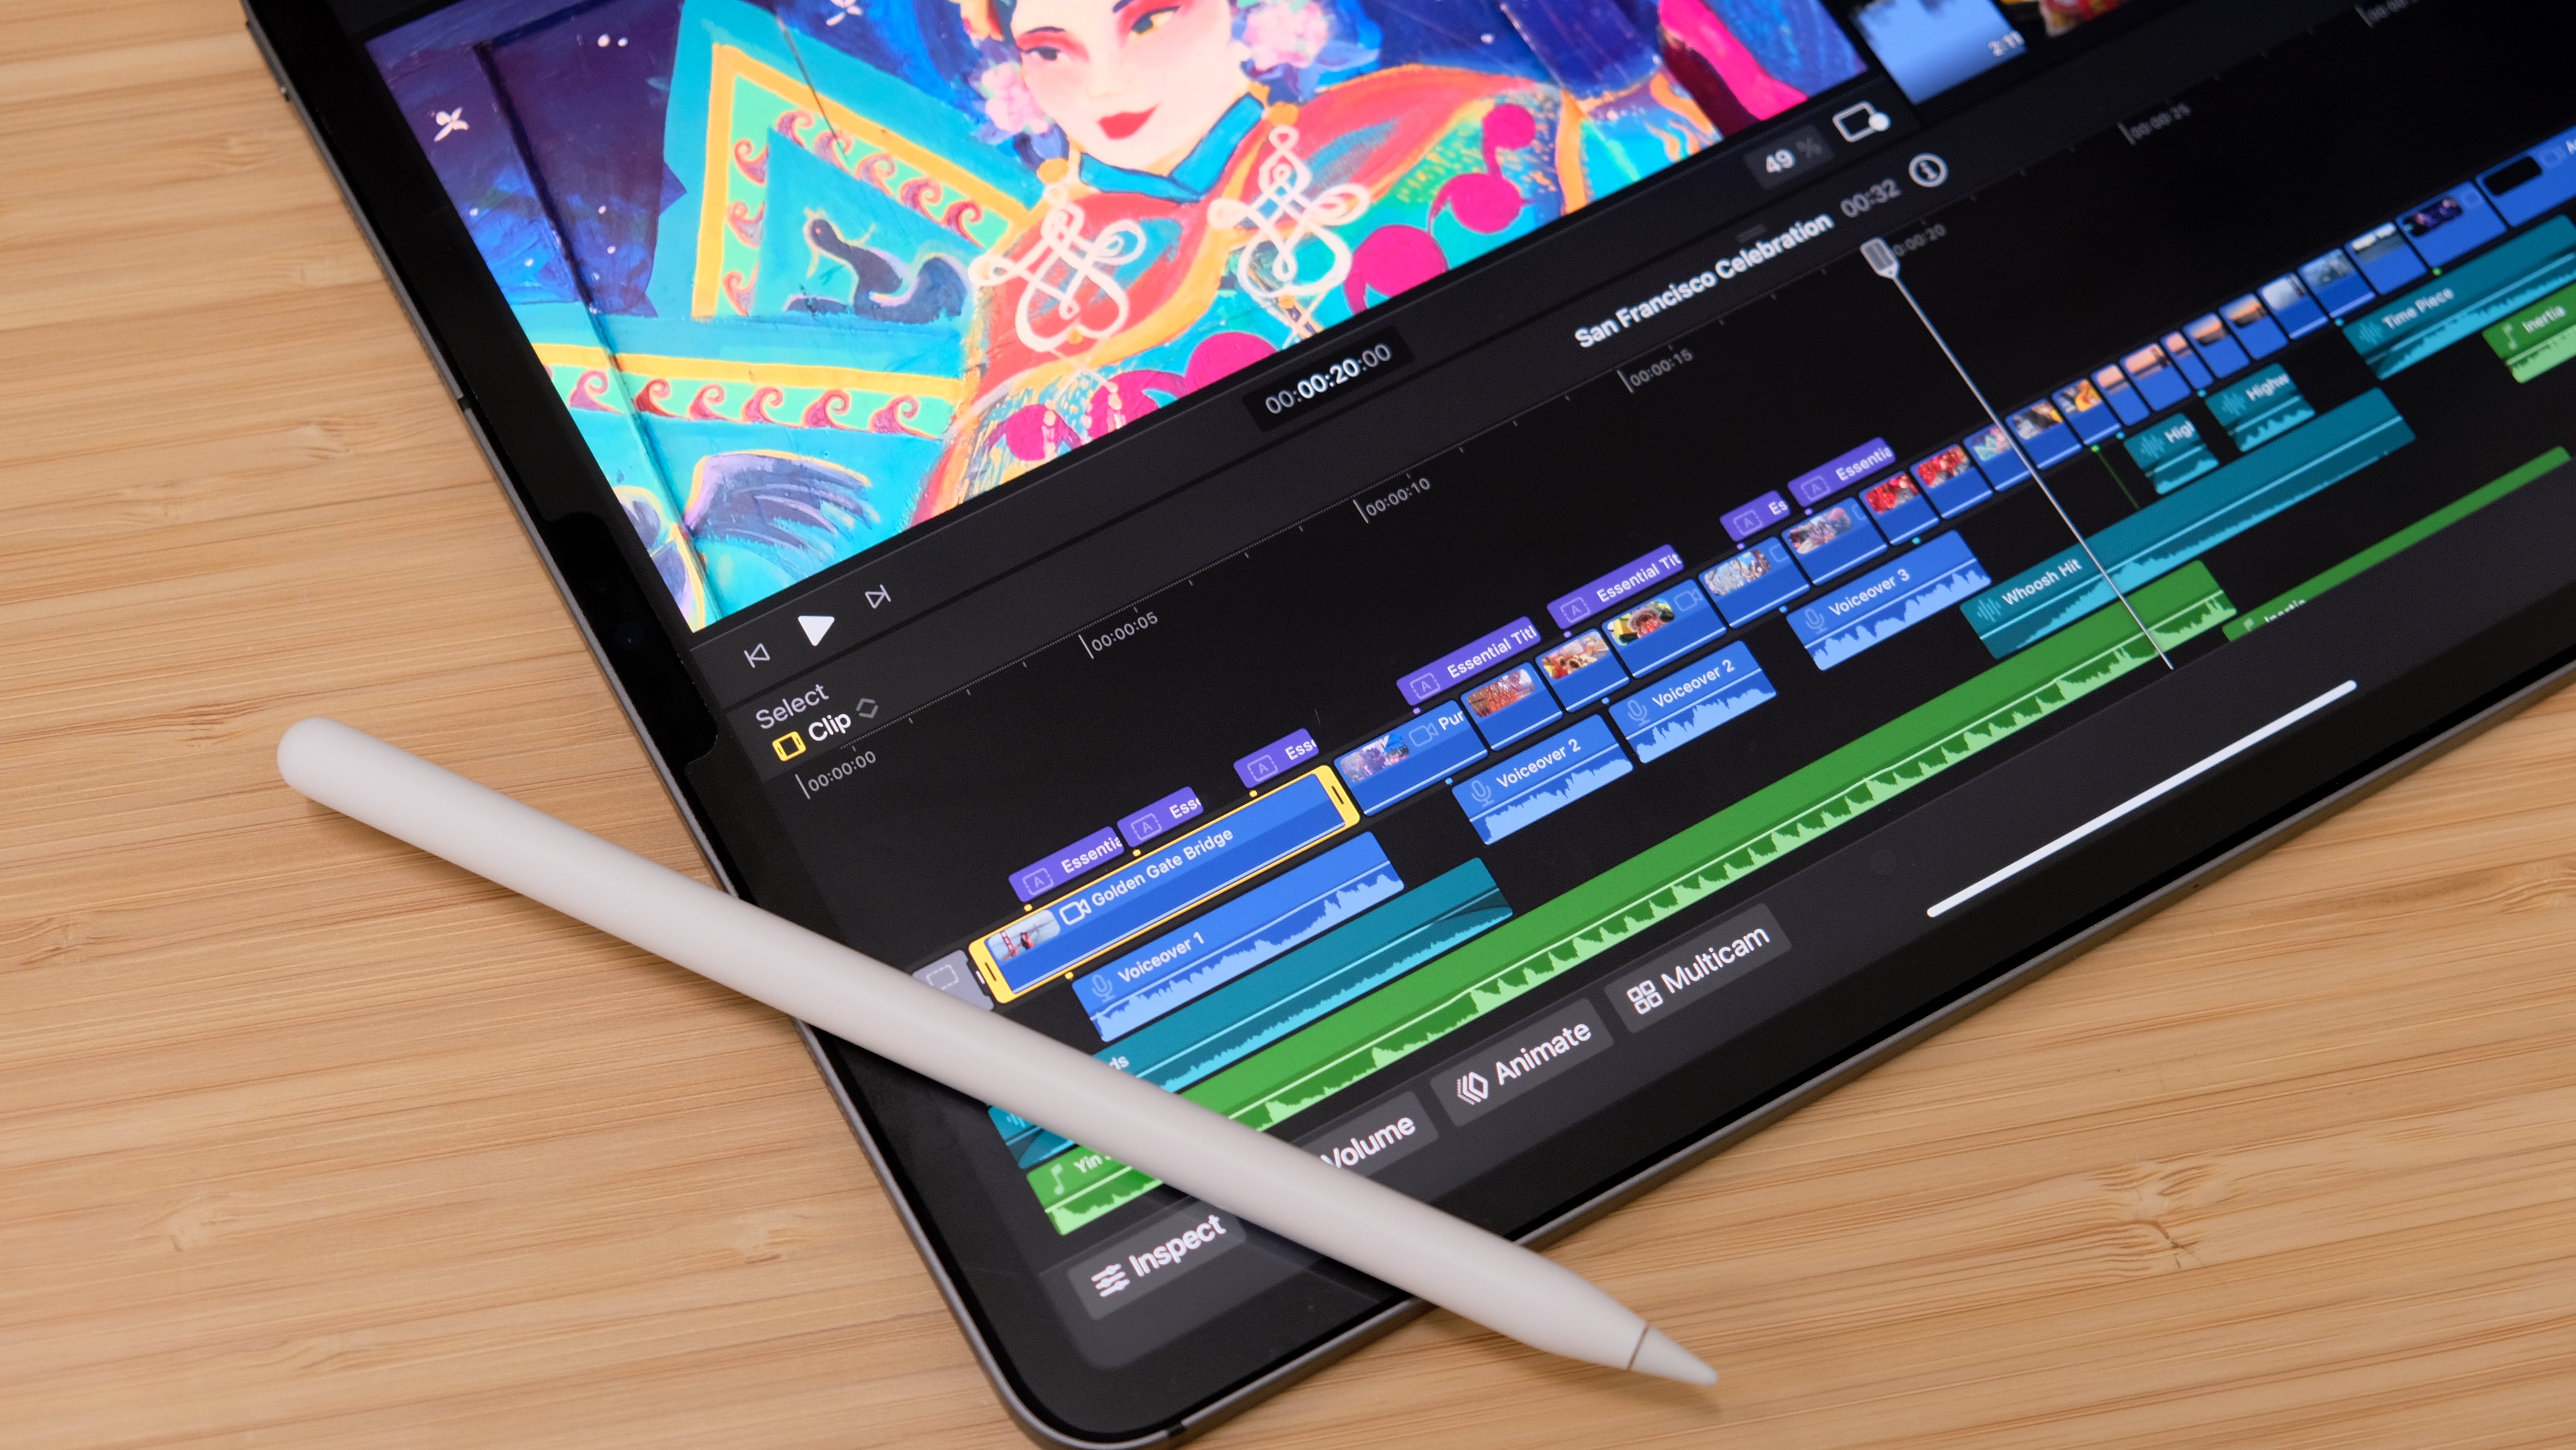 Can a new iPad Pro revive the moribund tablet market?